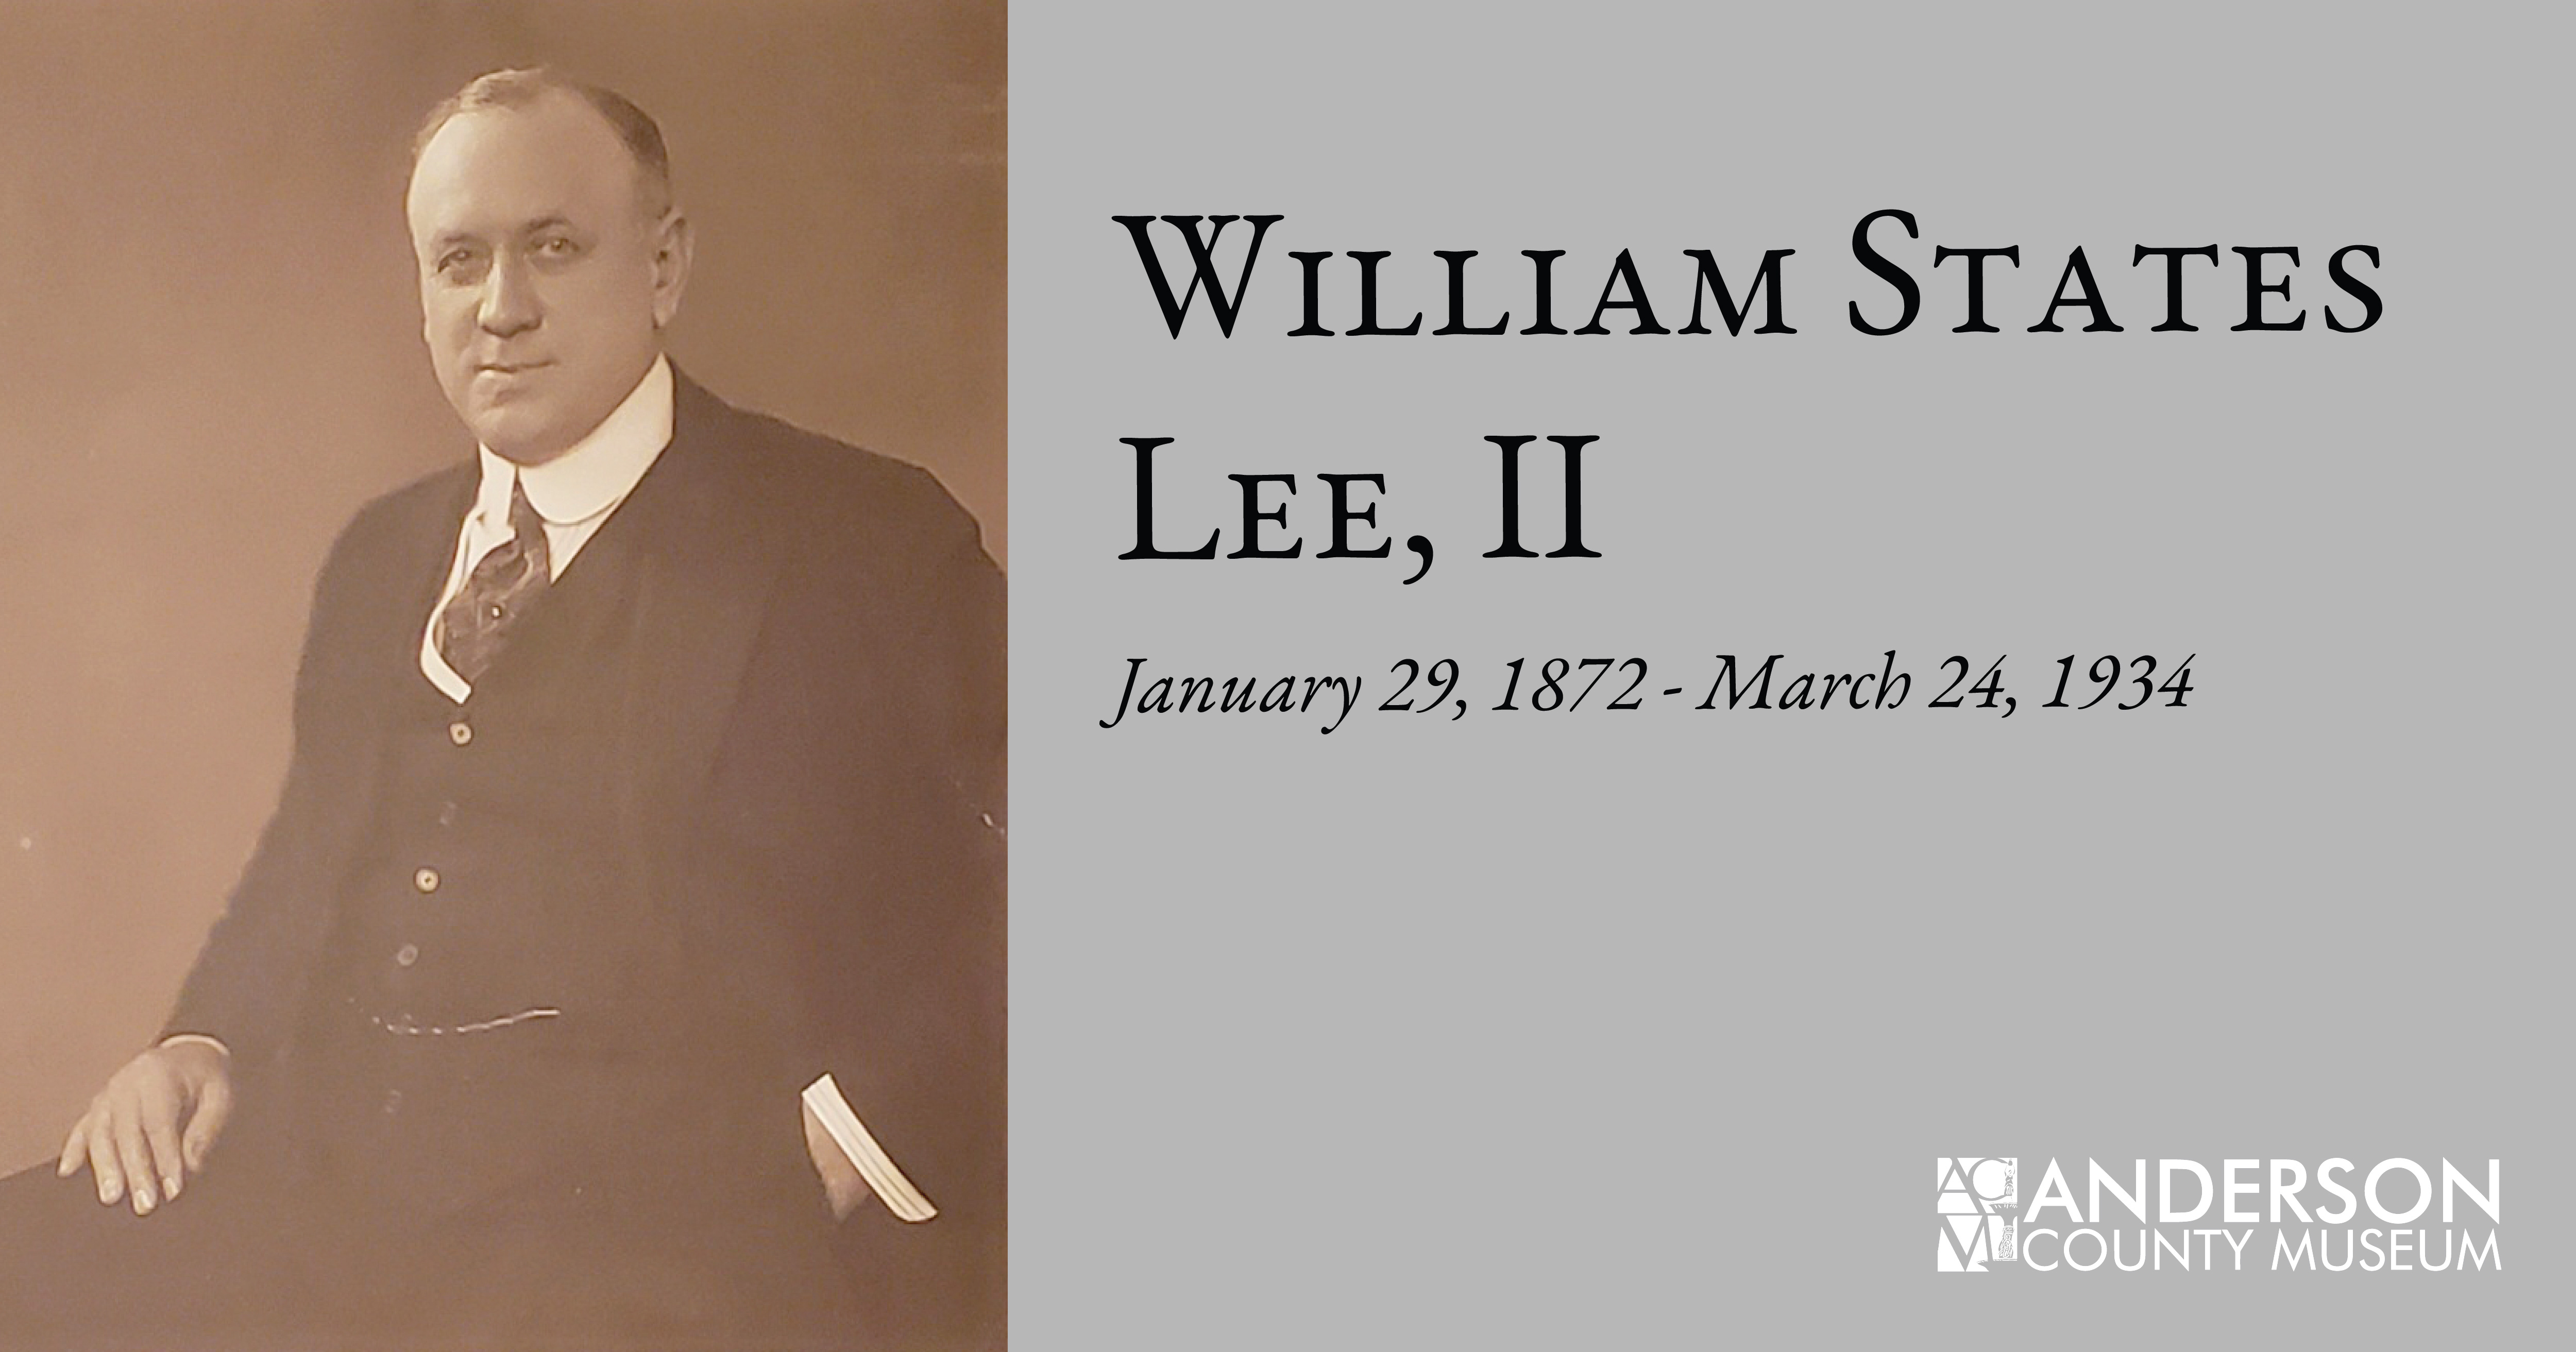 William States Lee, II